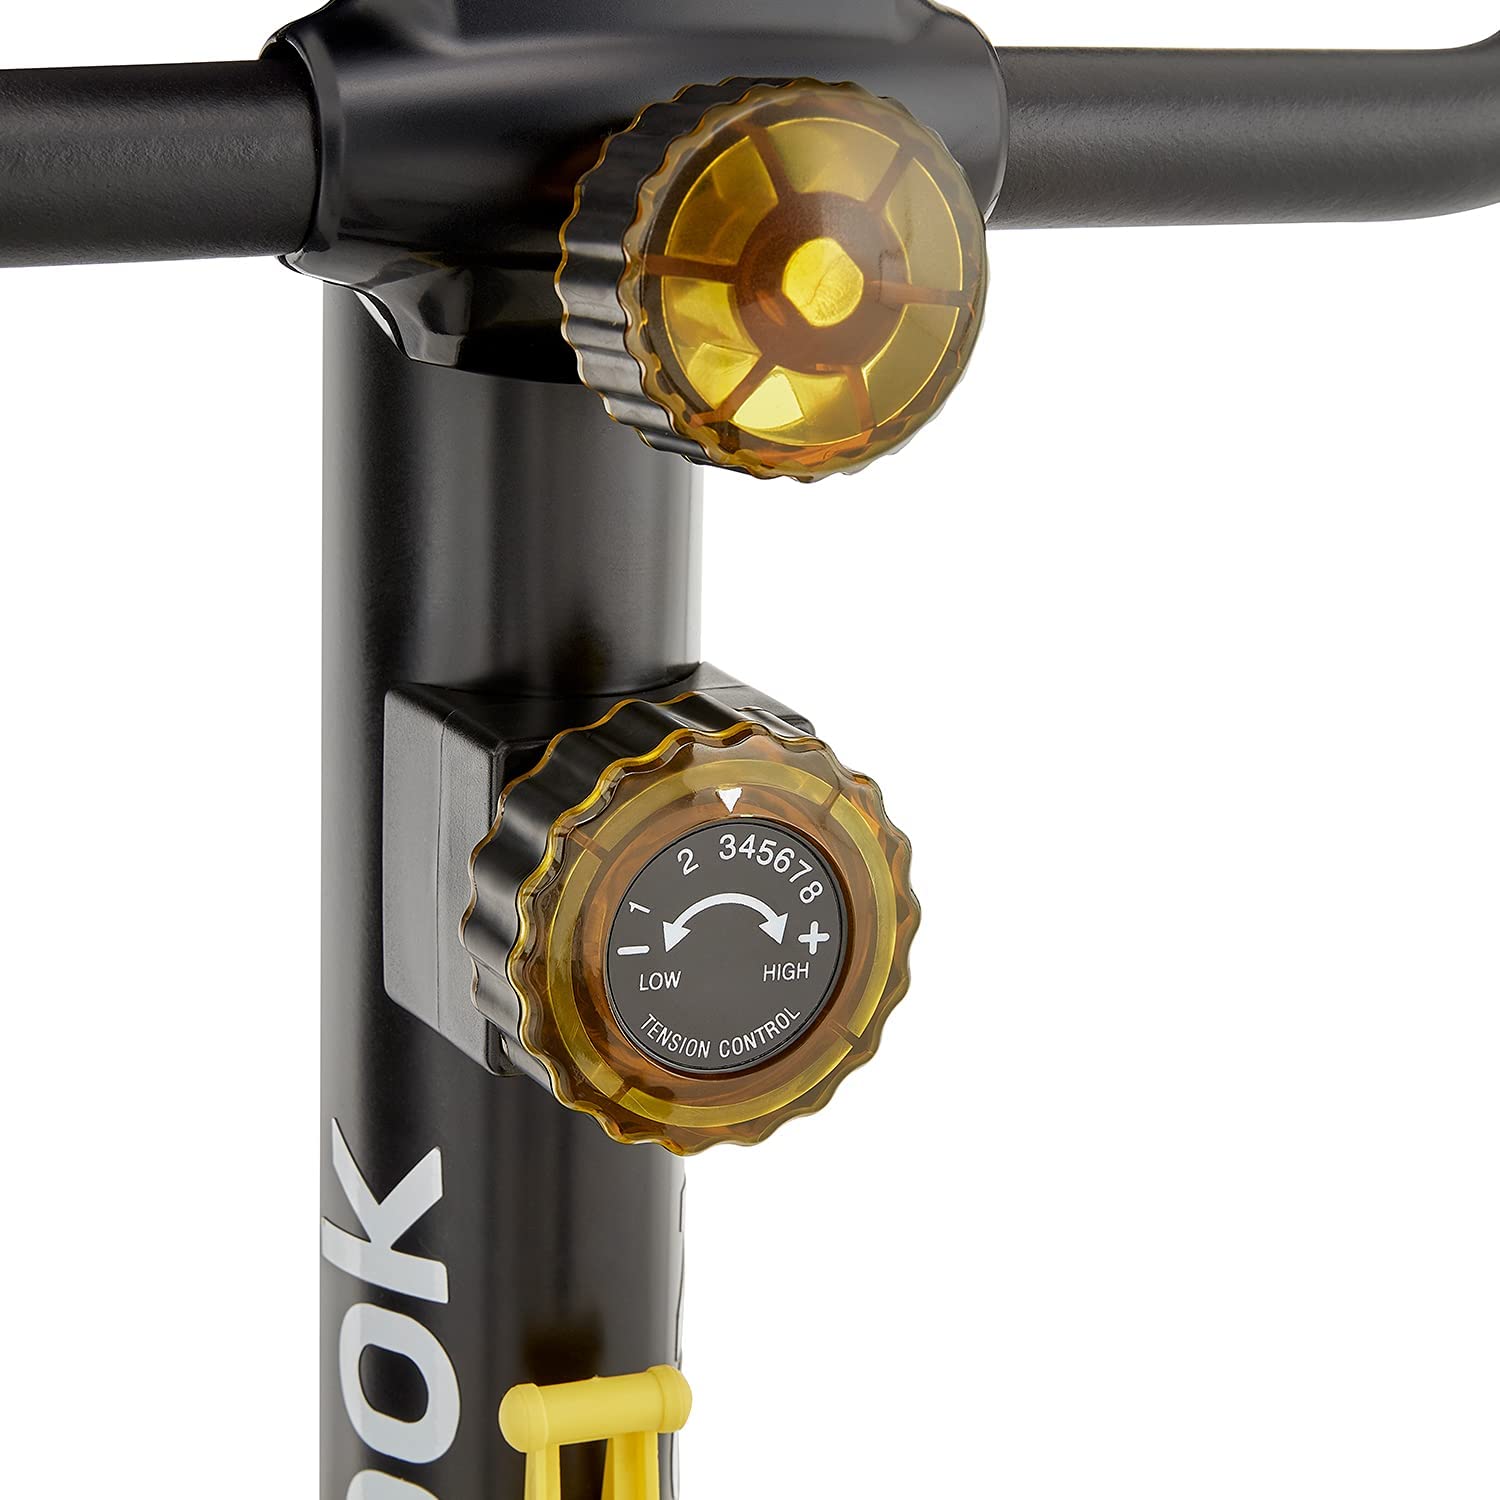 Reebok Exercise Bike GB40 - resistance dial